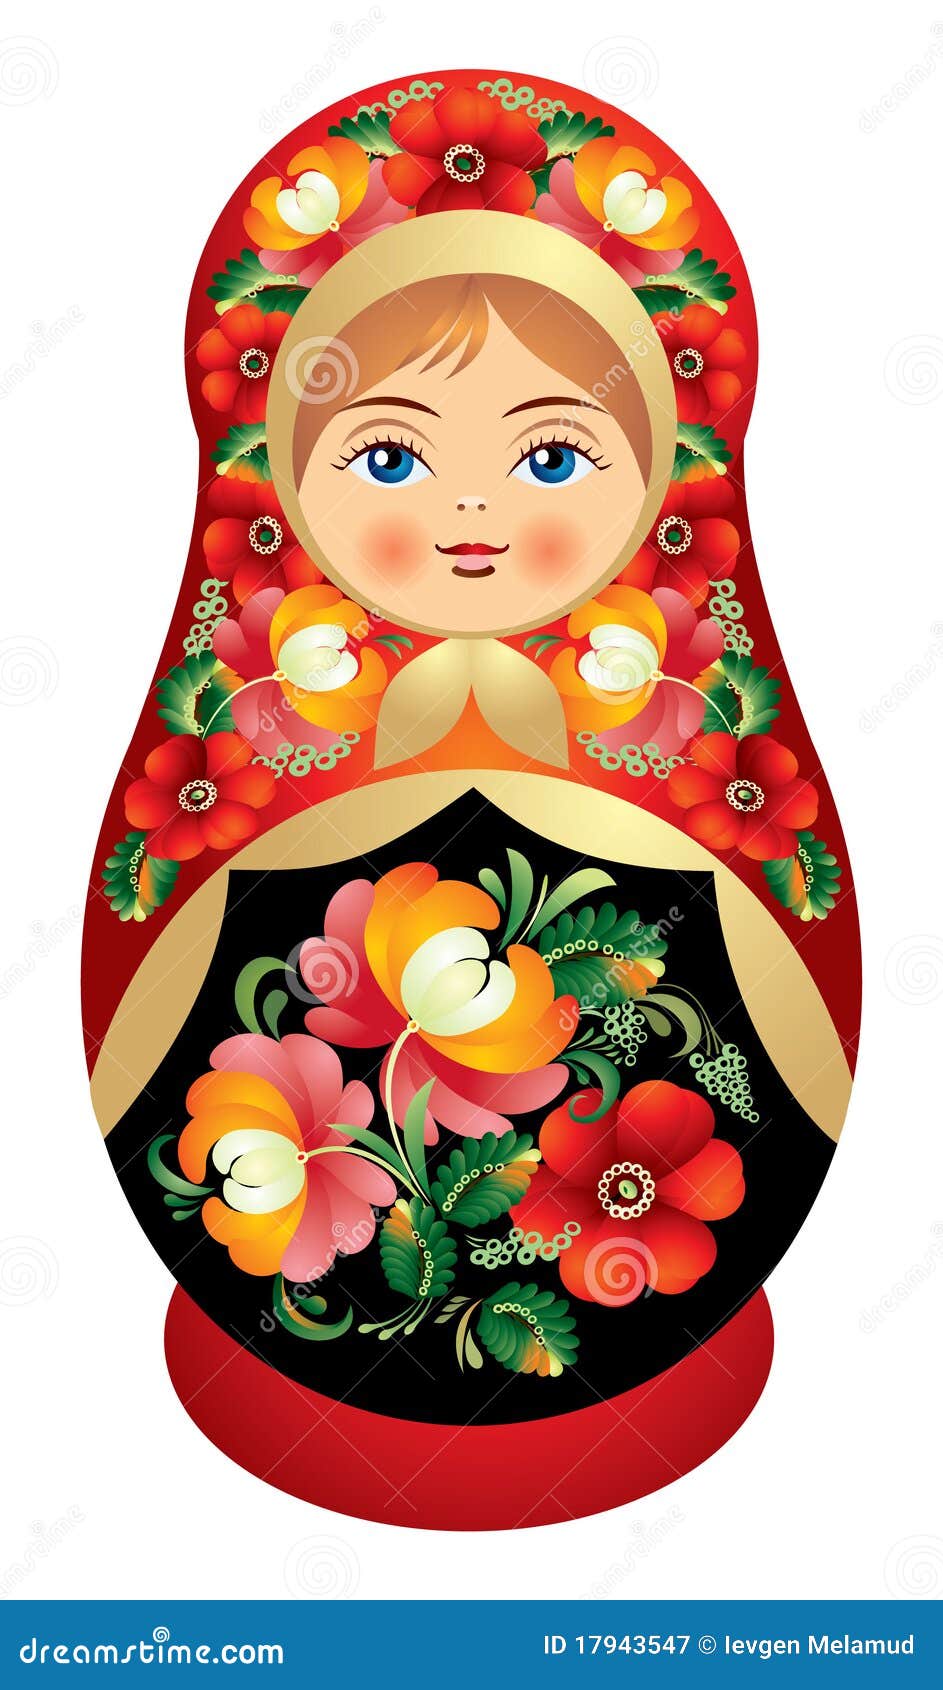 russian doll clip art free - photo #38